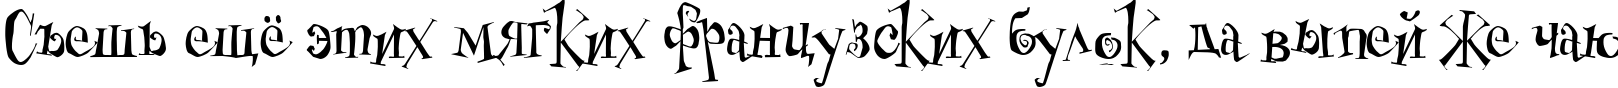 Пример написания шрифтом Cheshirskiy Cat Roman текста на русском